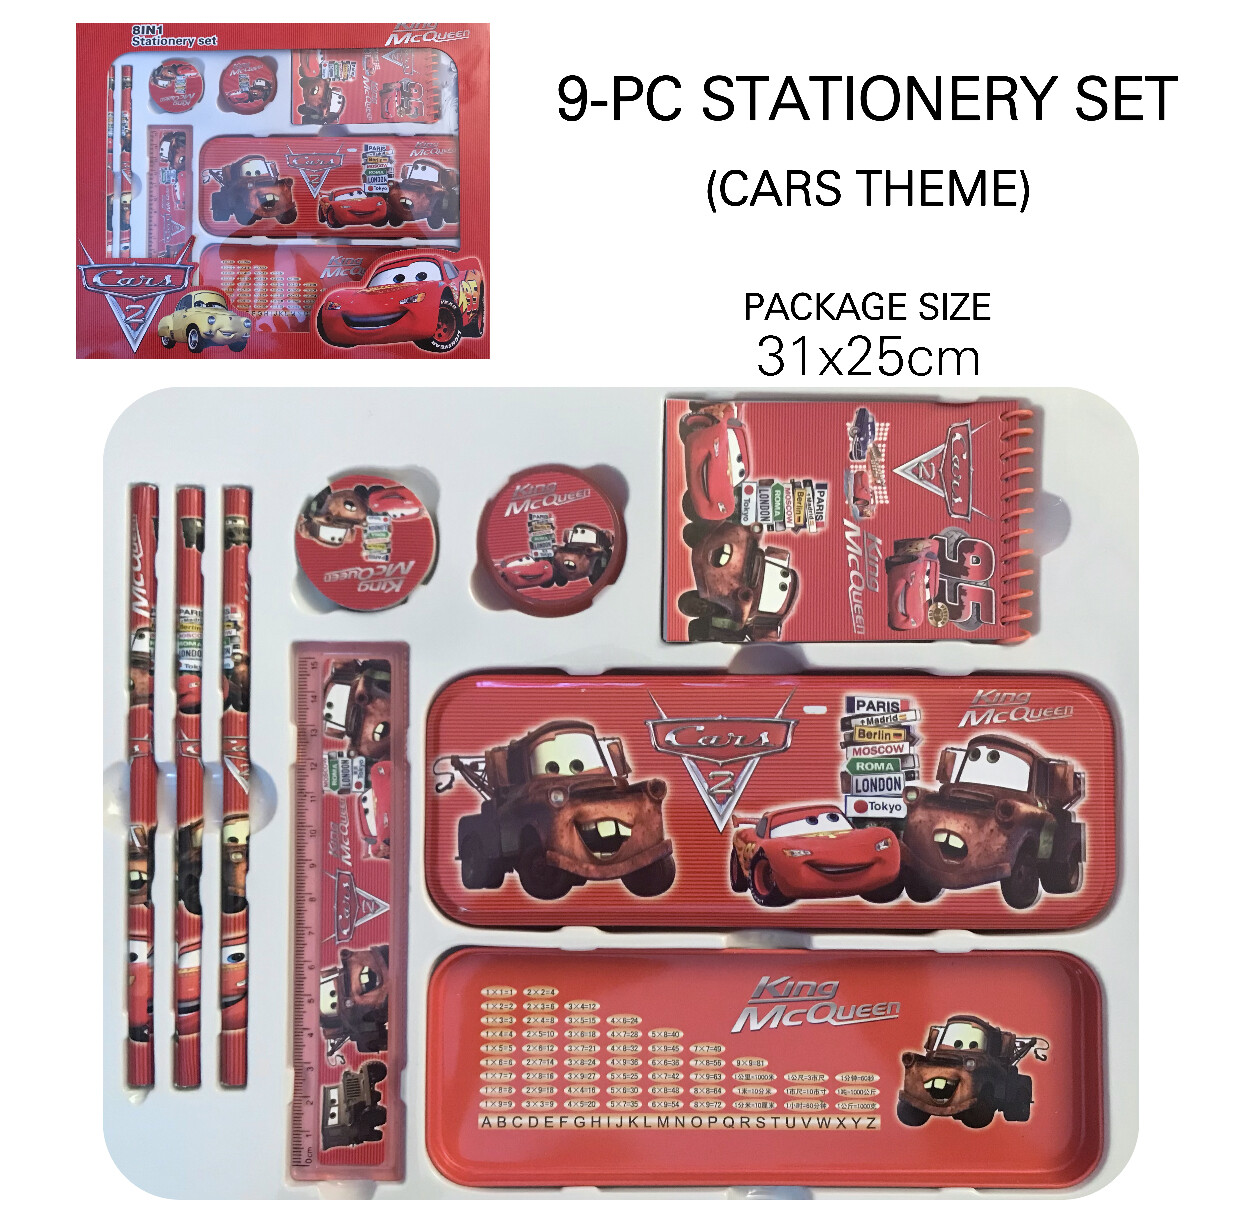 9-Pc Stationery Set